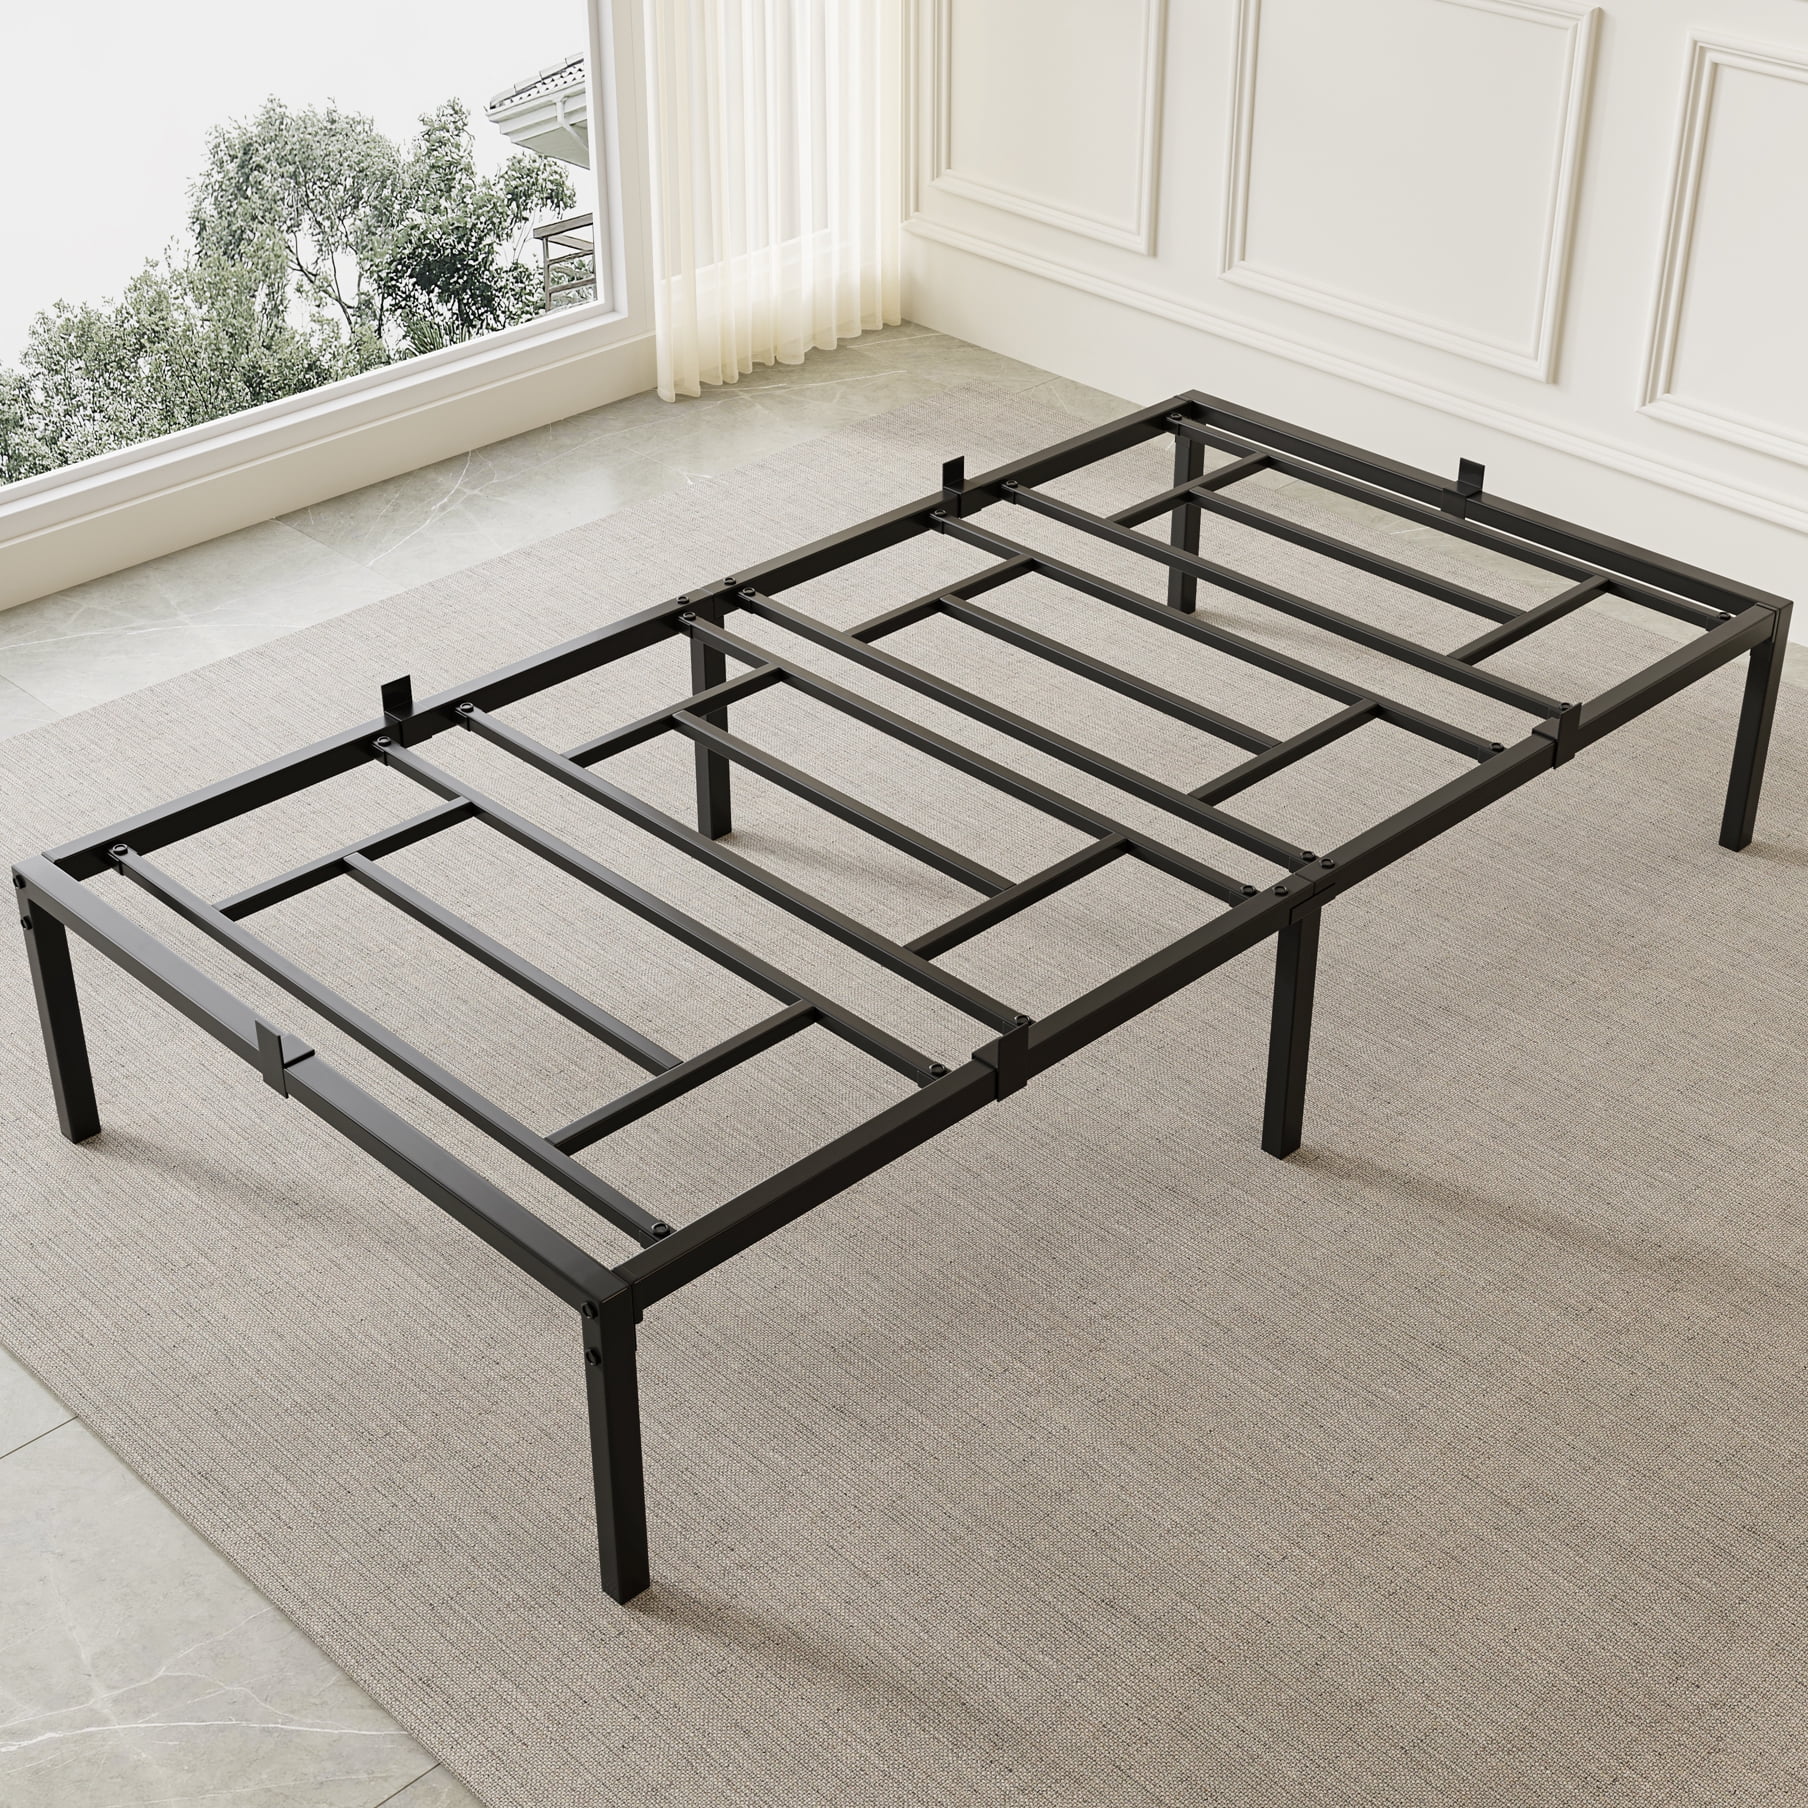 14 High Metal Platform Bed Frame Twin, High Twin Size Bed Frame